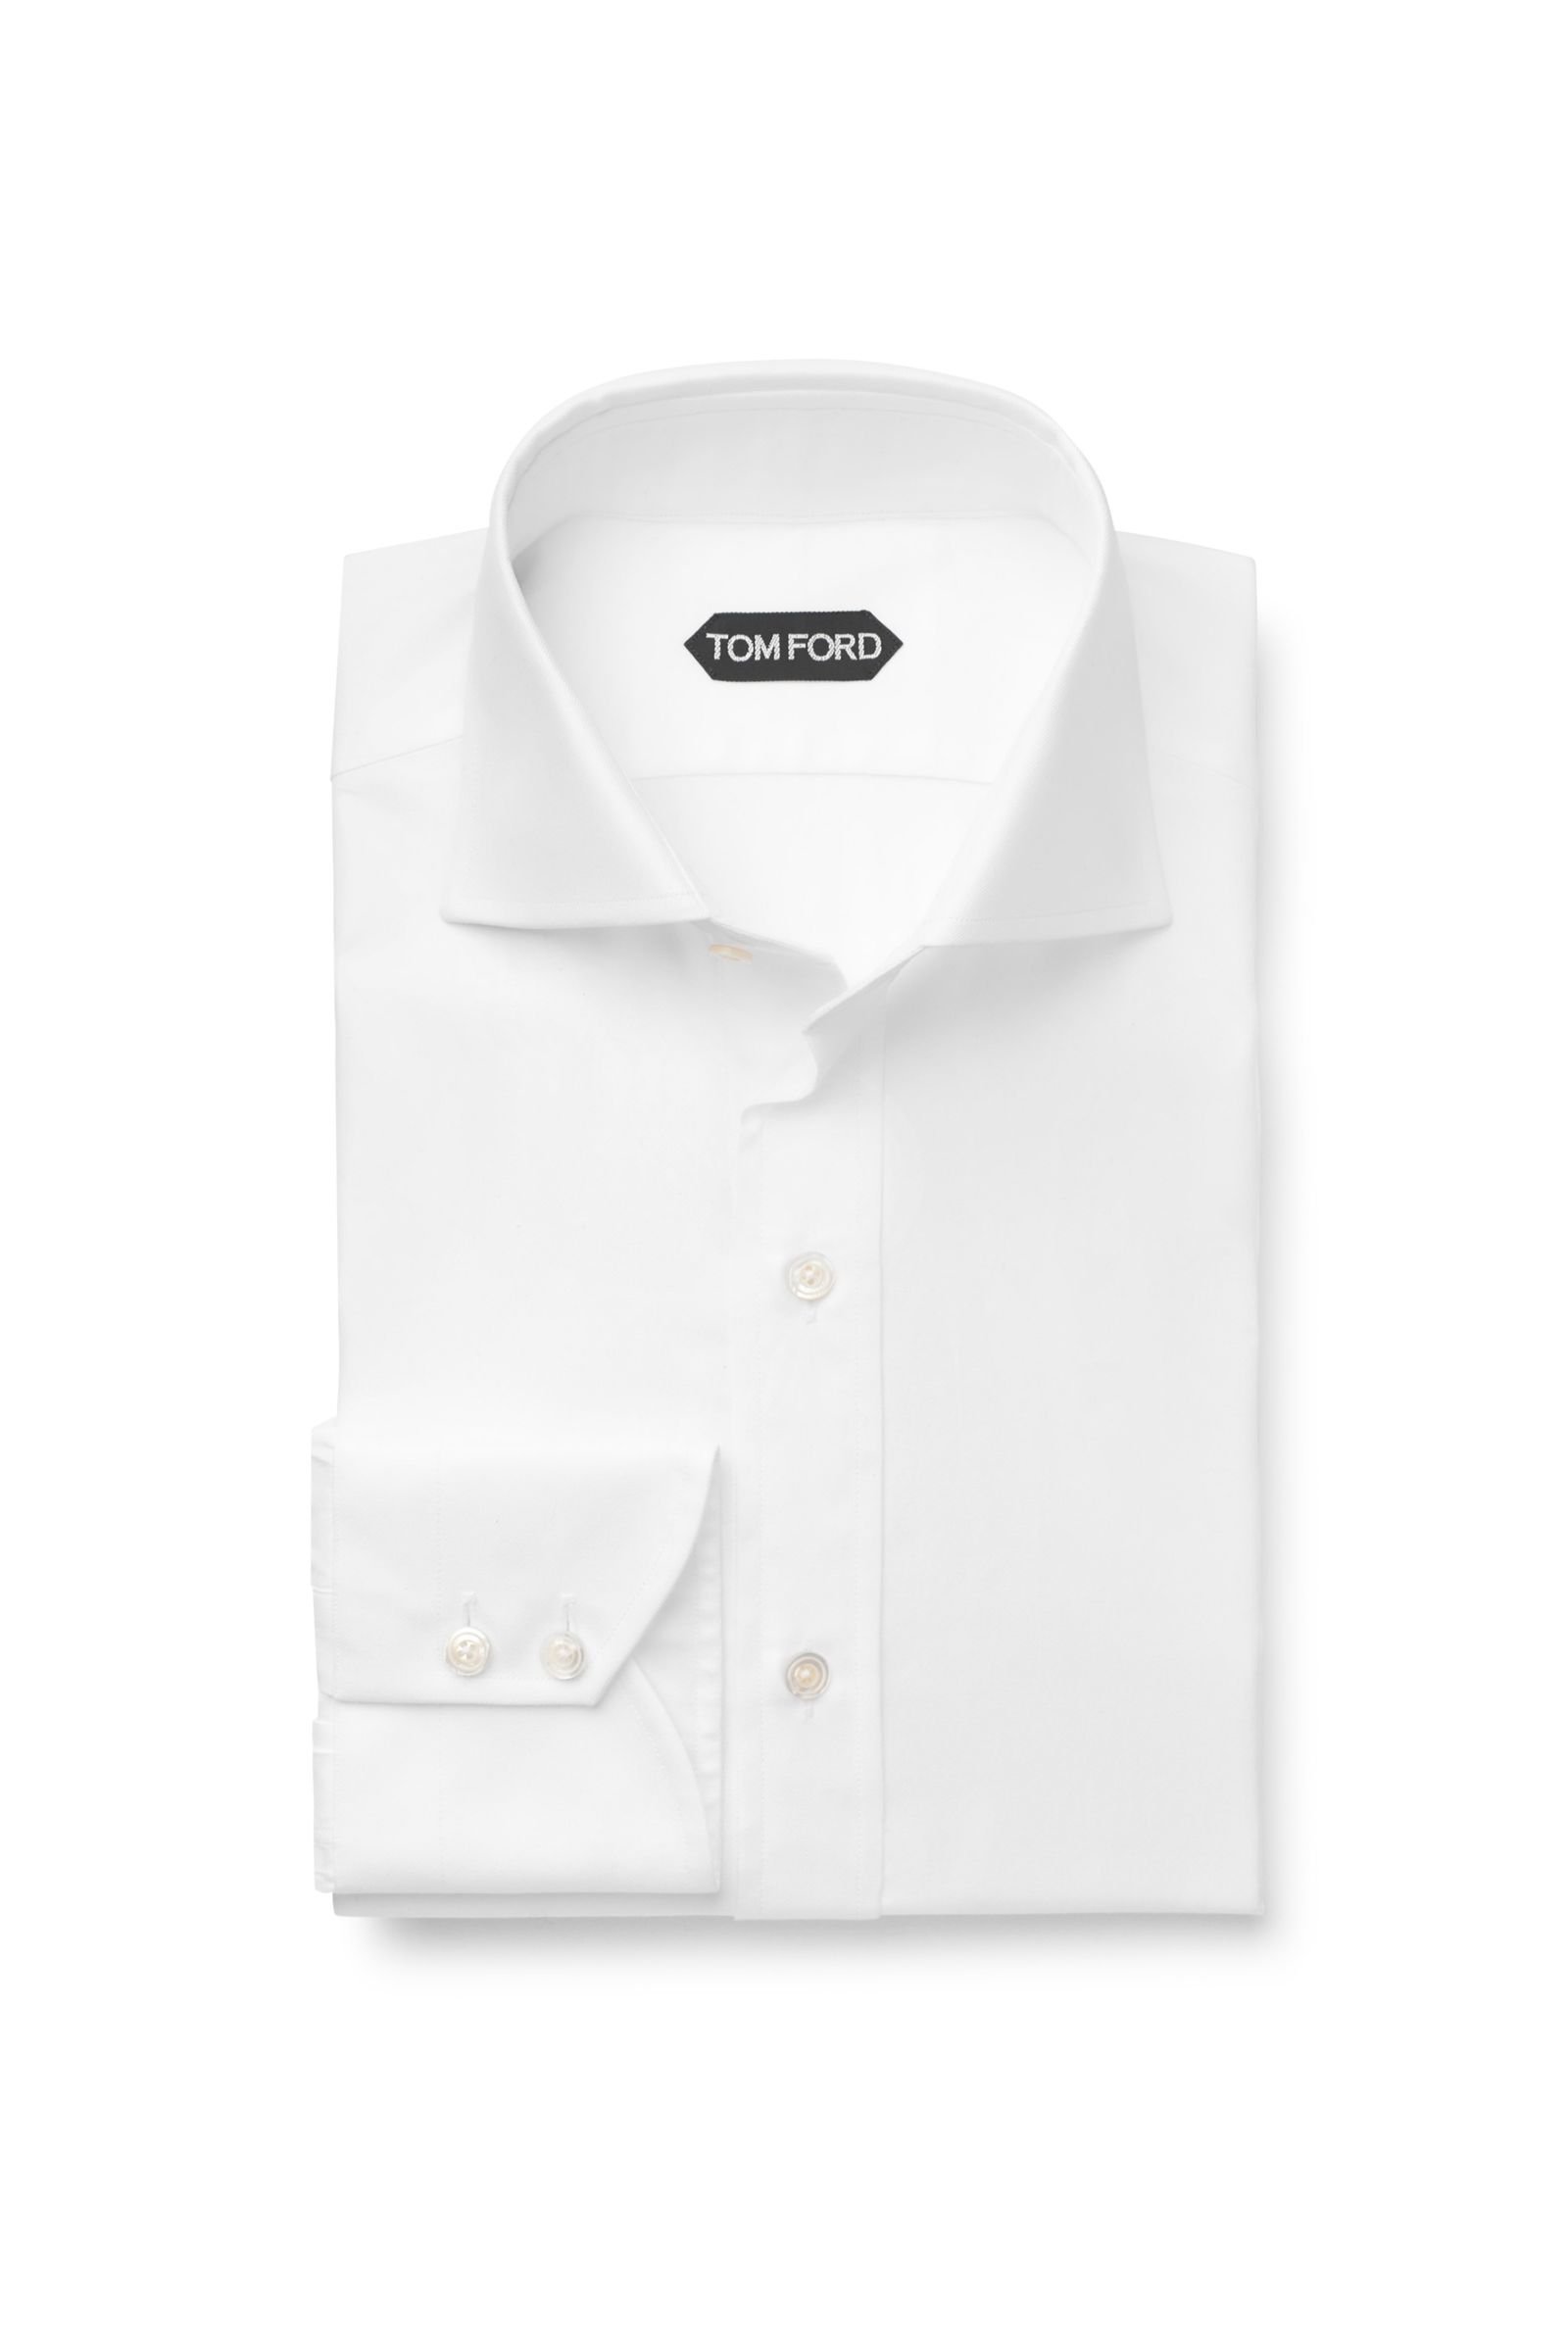 TOM FORD business shirt shark collar white | BRAUN Hamburg